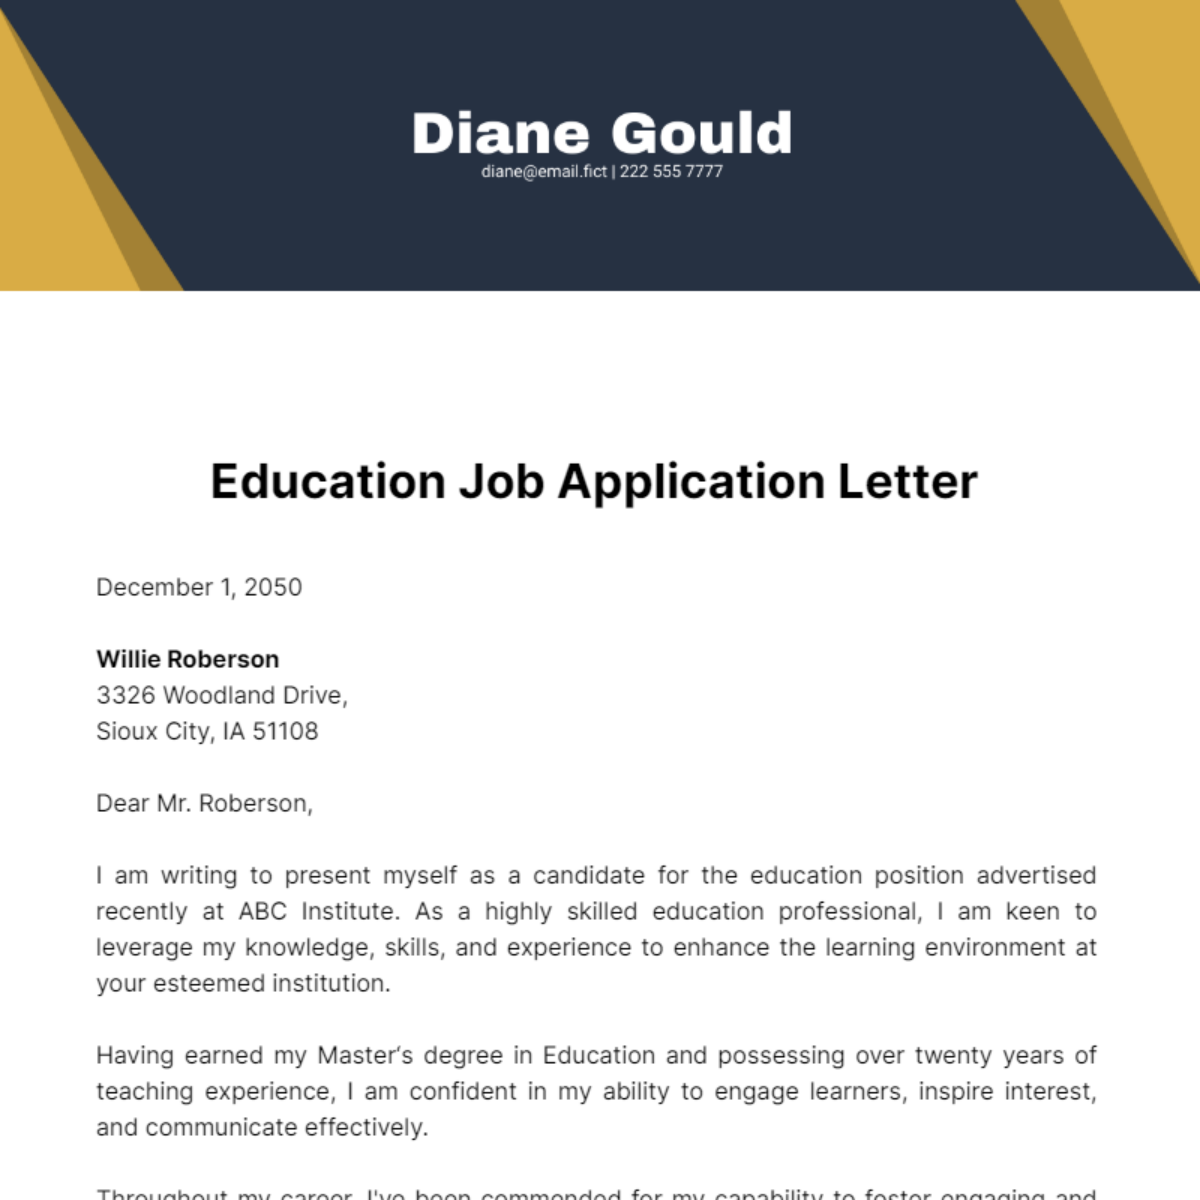 Education Job Application Letter Template